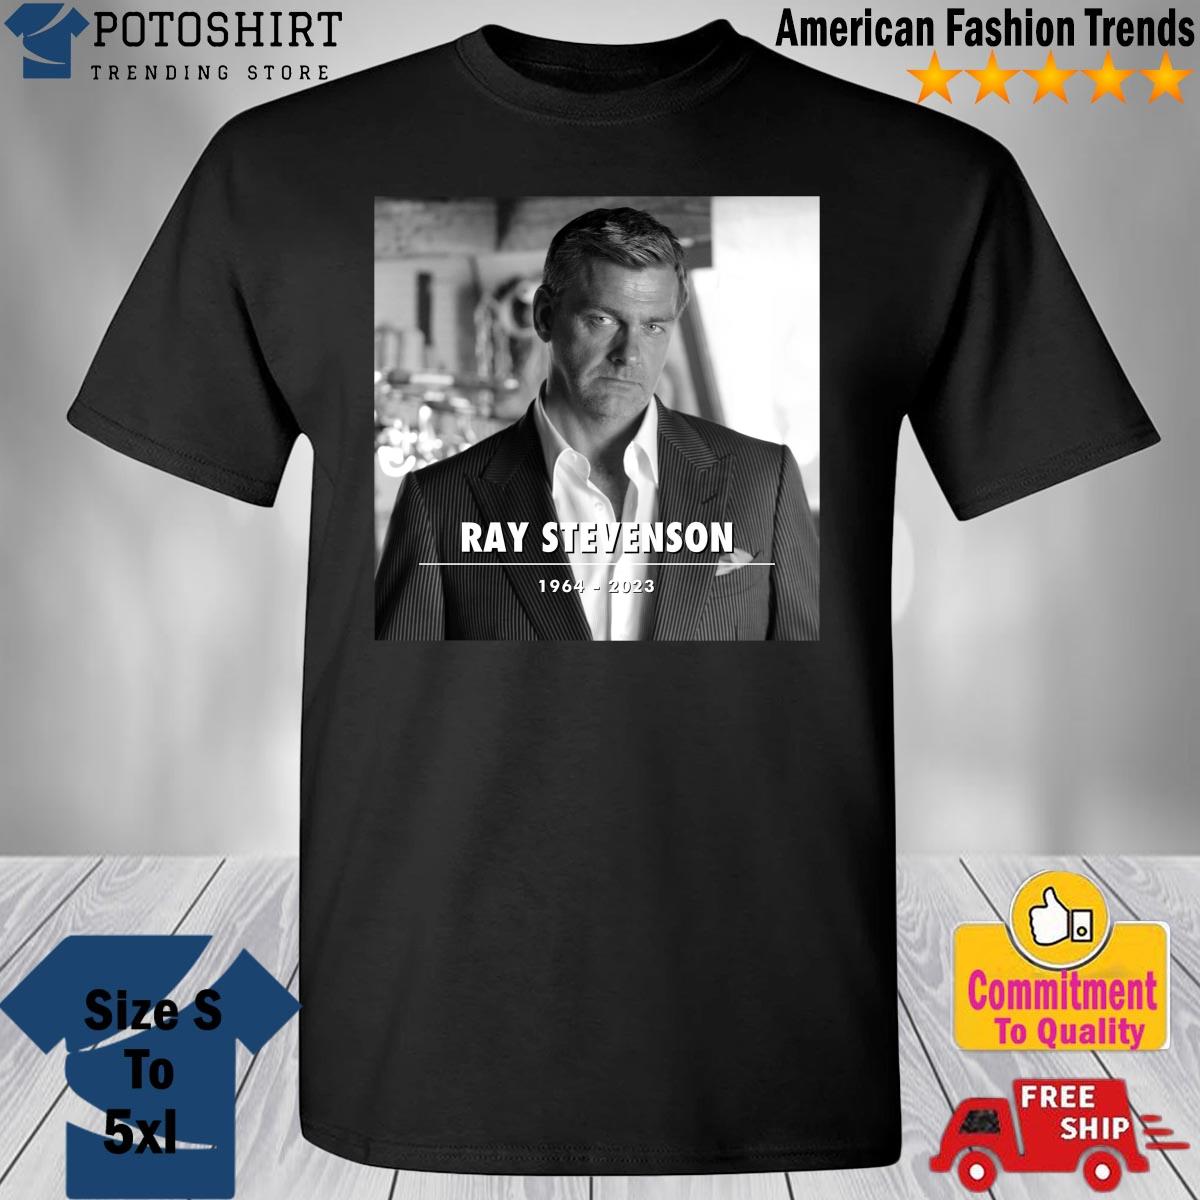 Ray Stevenson RIP 1964-2023 shirt